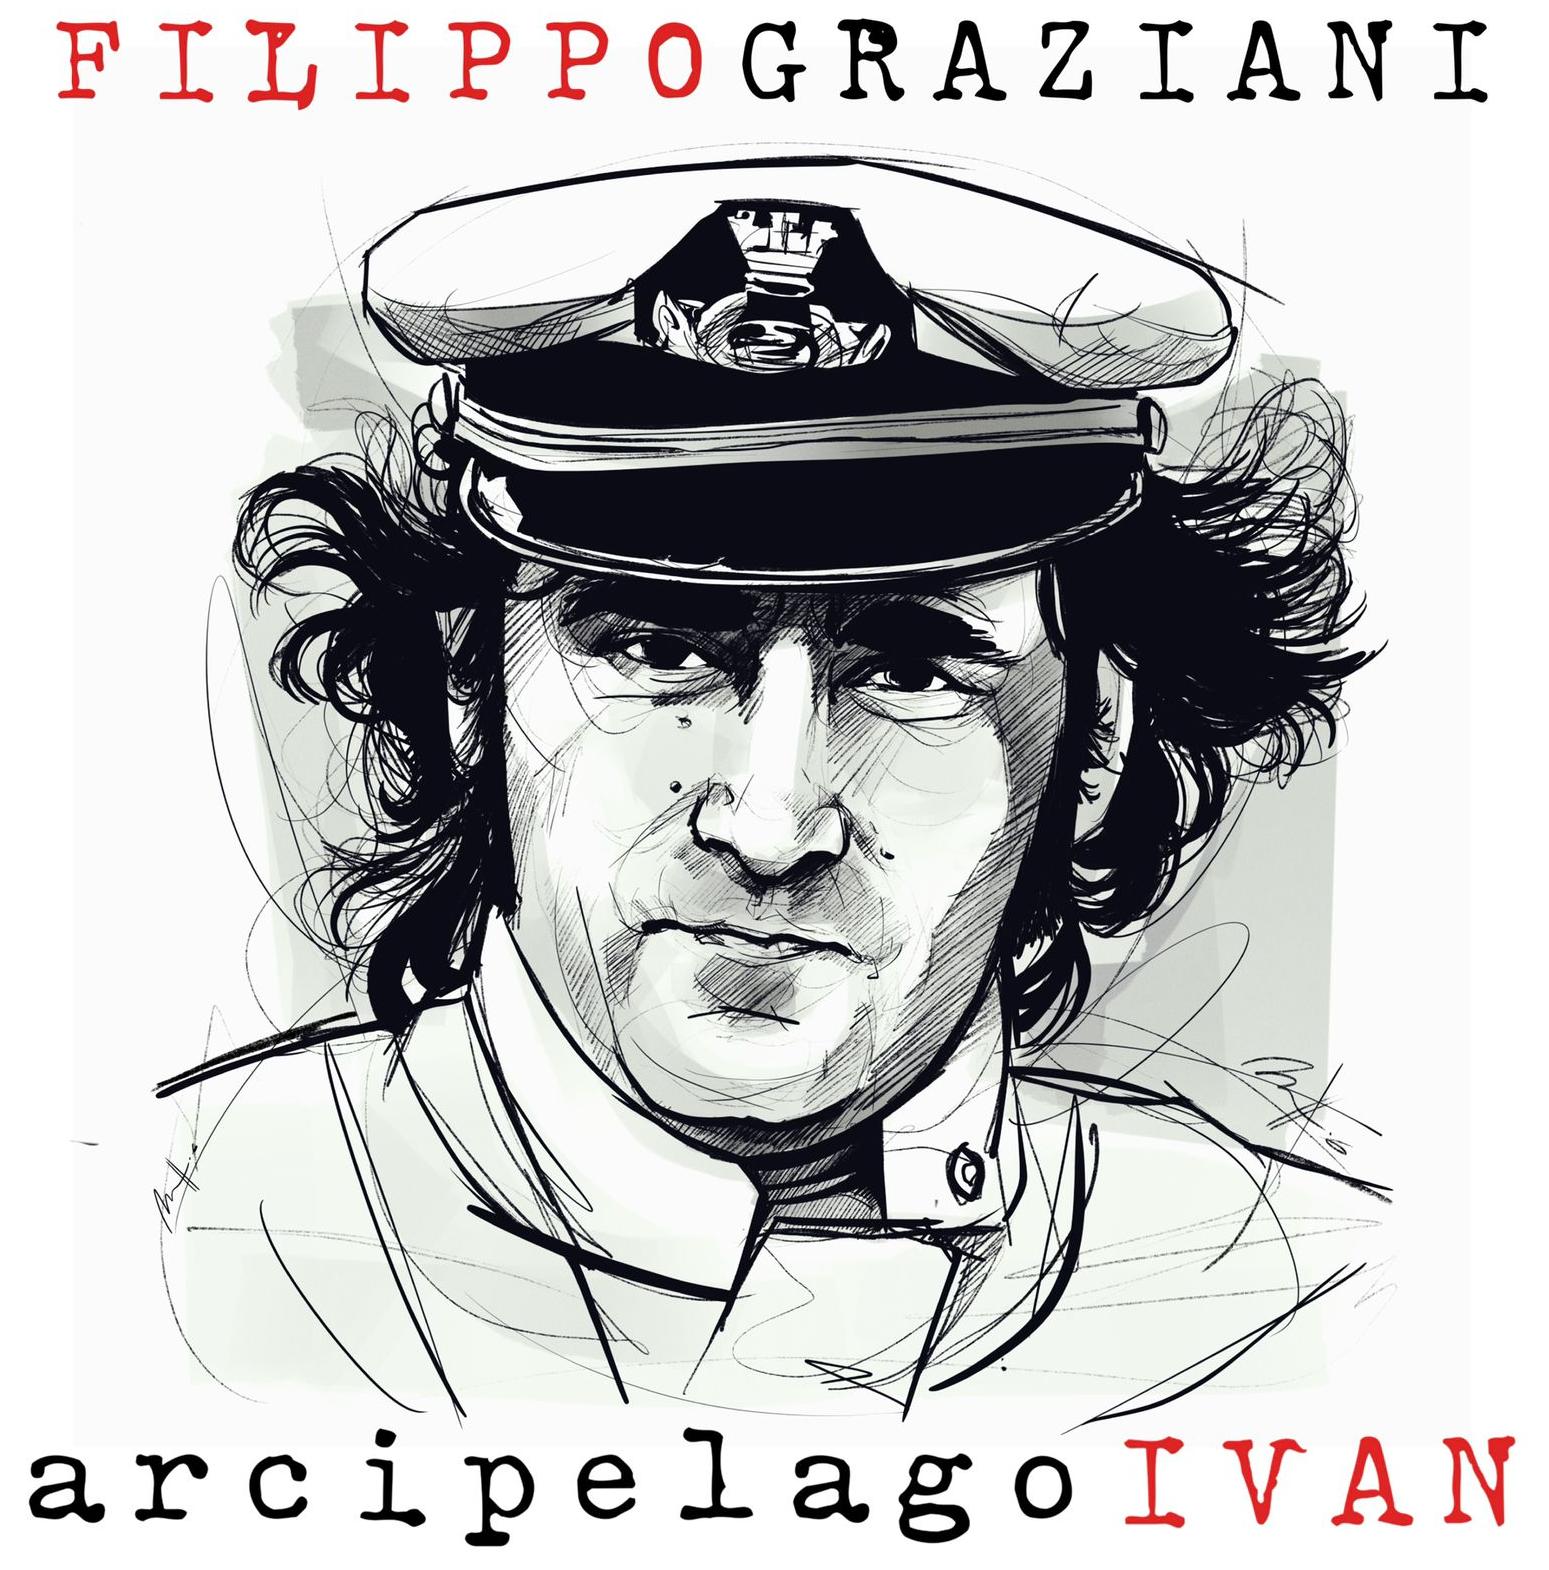 Filippo Graziani in ARCIPELAGO IVAN